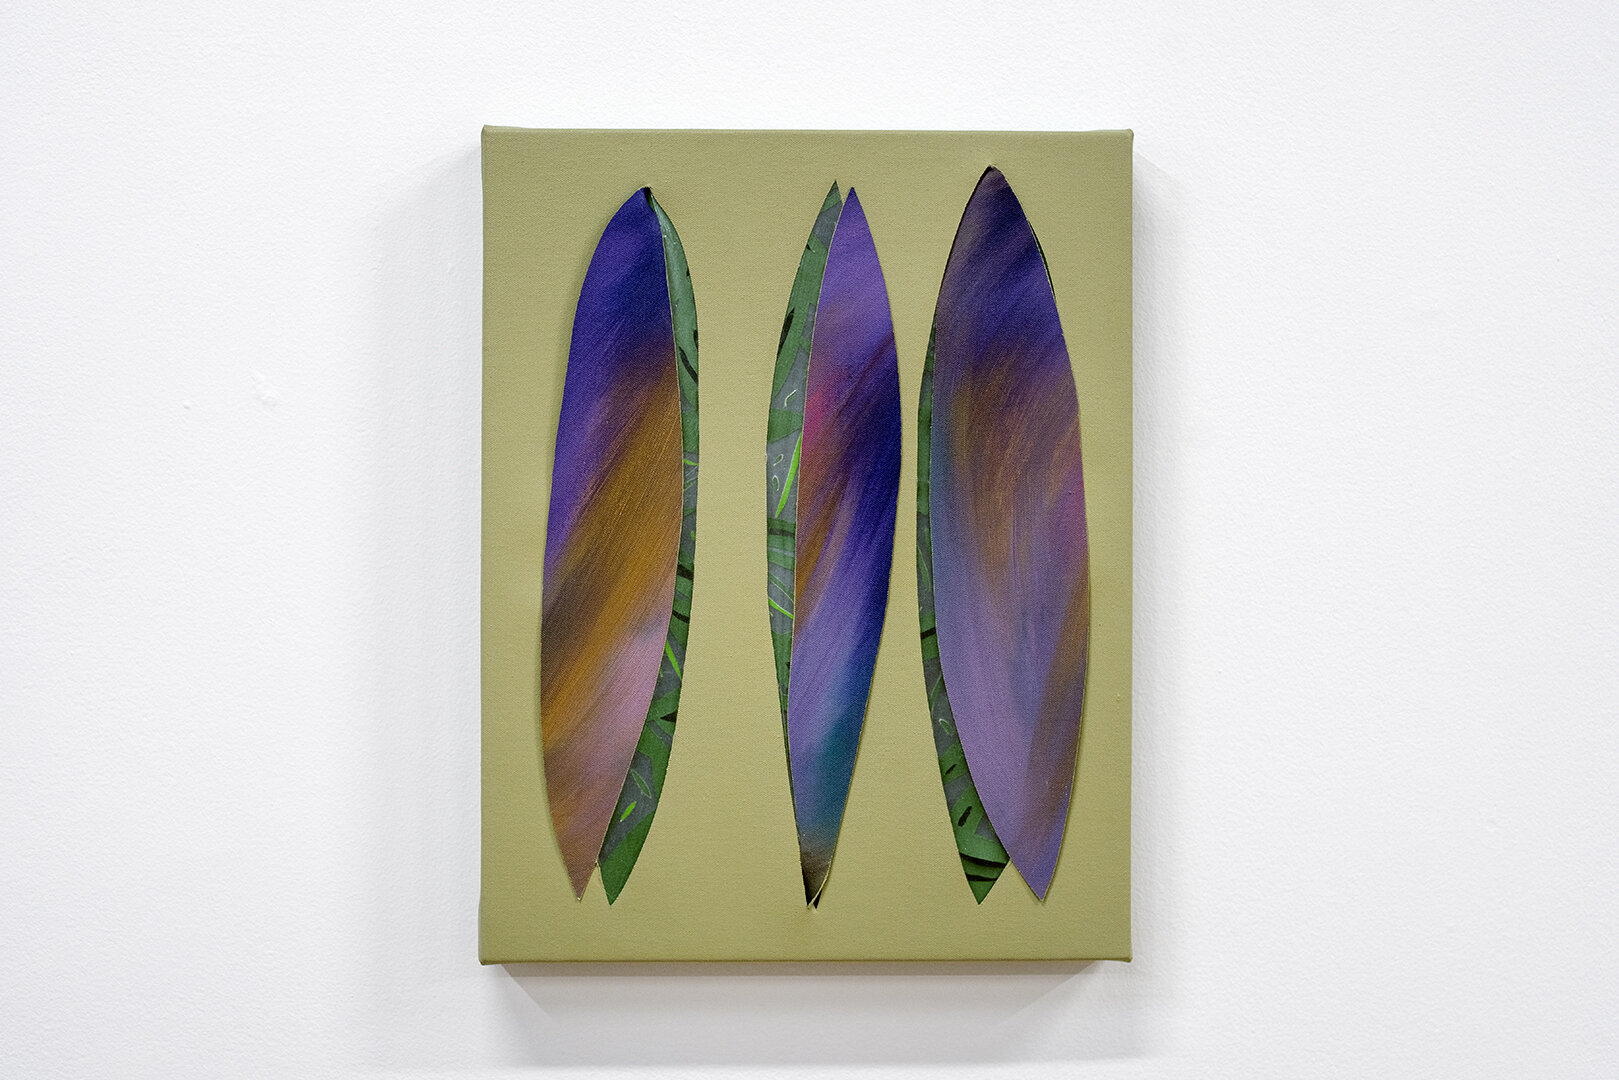   Untitled   Acrylic and gel medium on canvas 18” x 14”  2018 